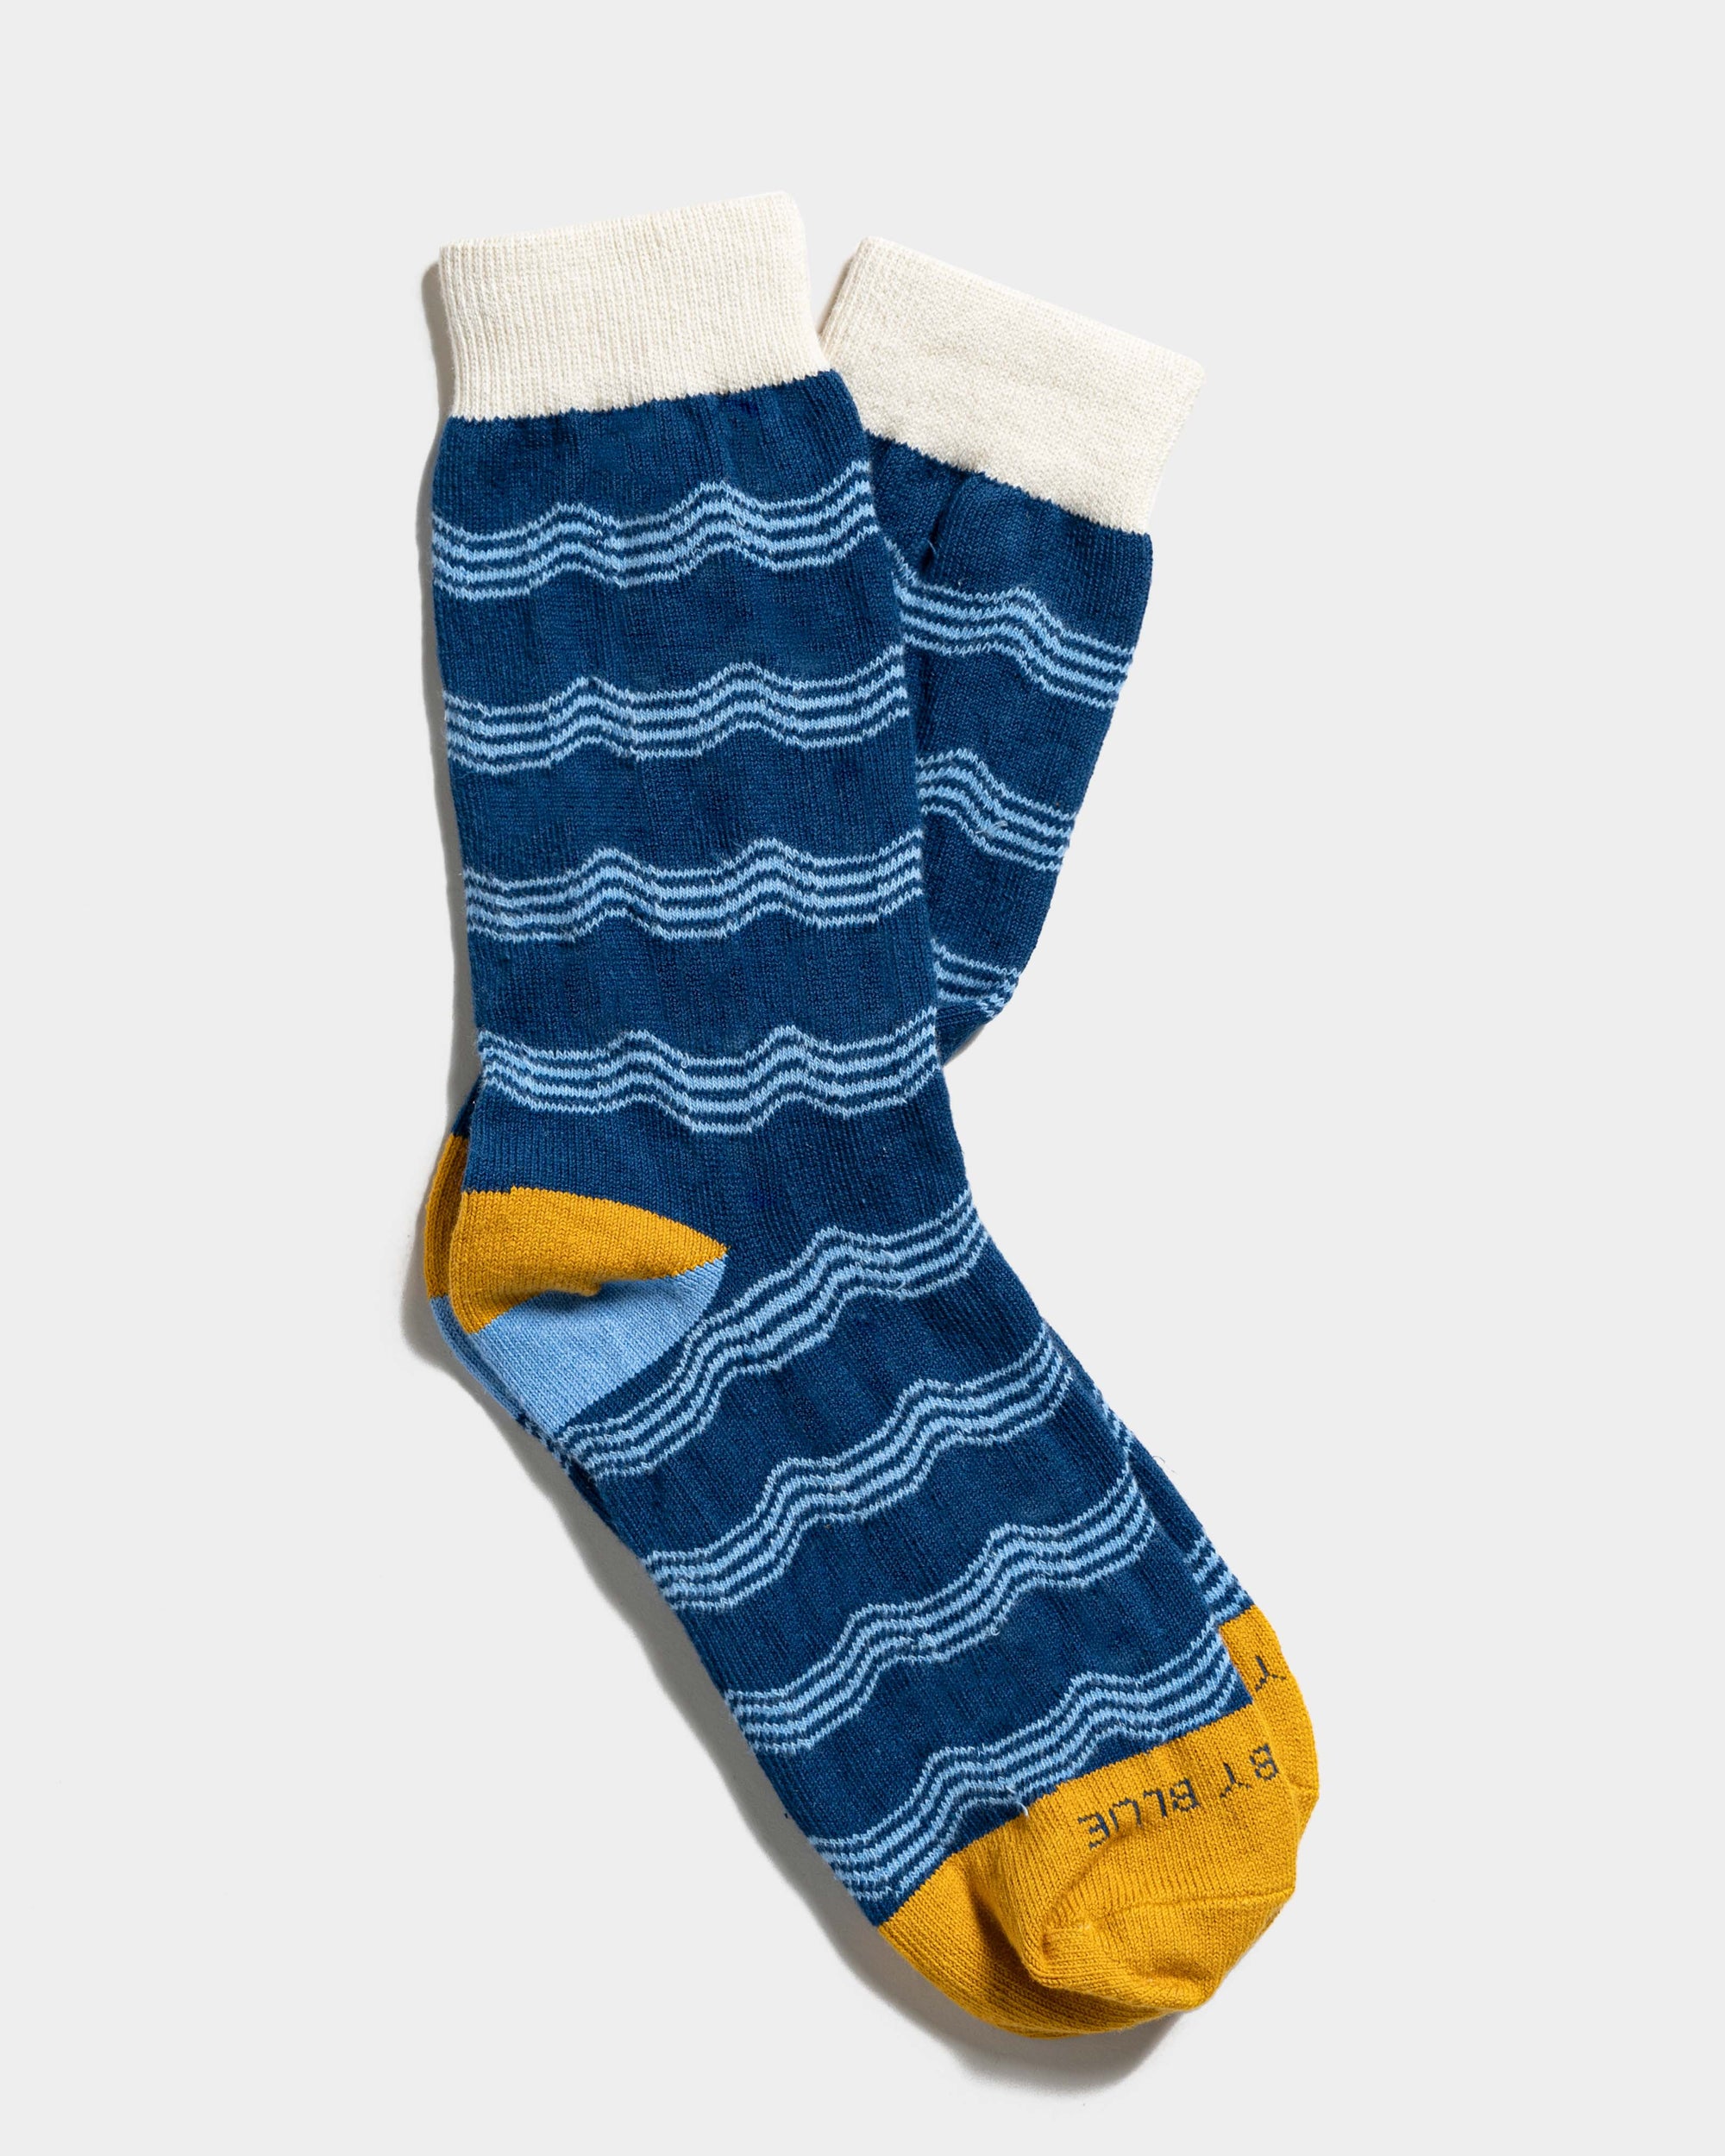 Printed SoftHemp™ Sock